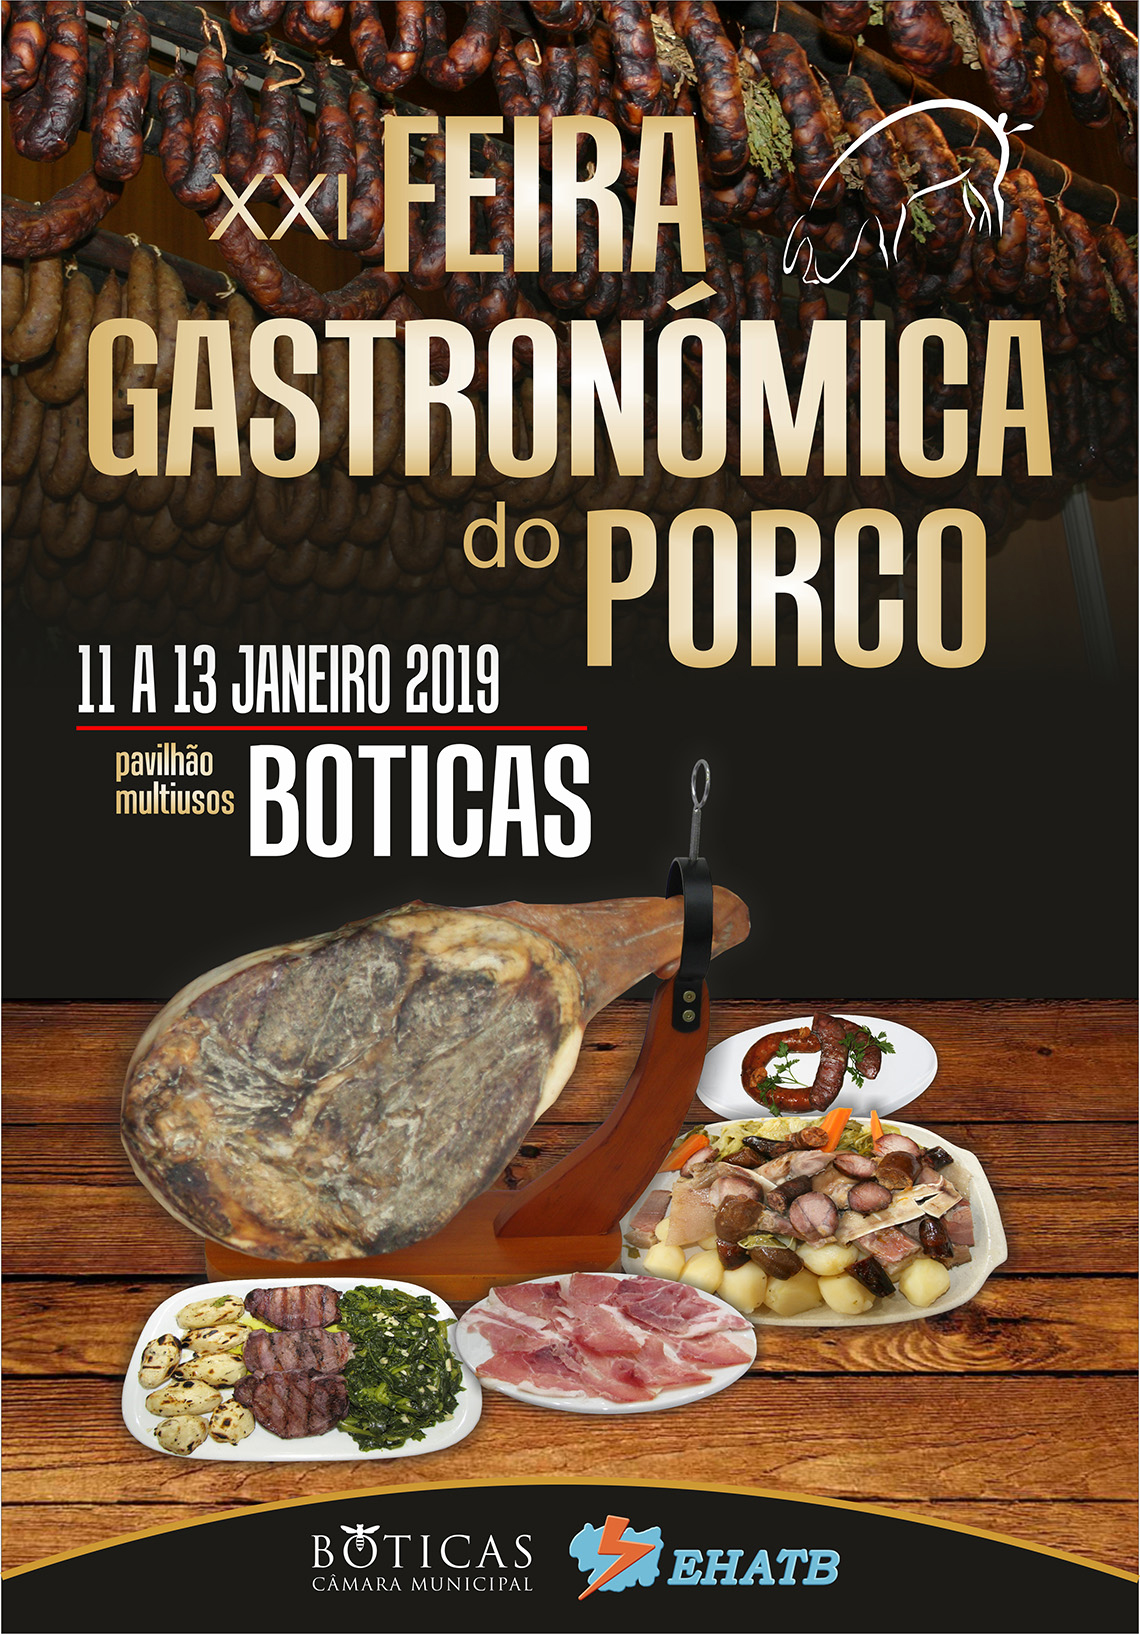 XXI Feira Gastronómica do Porco